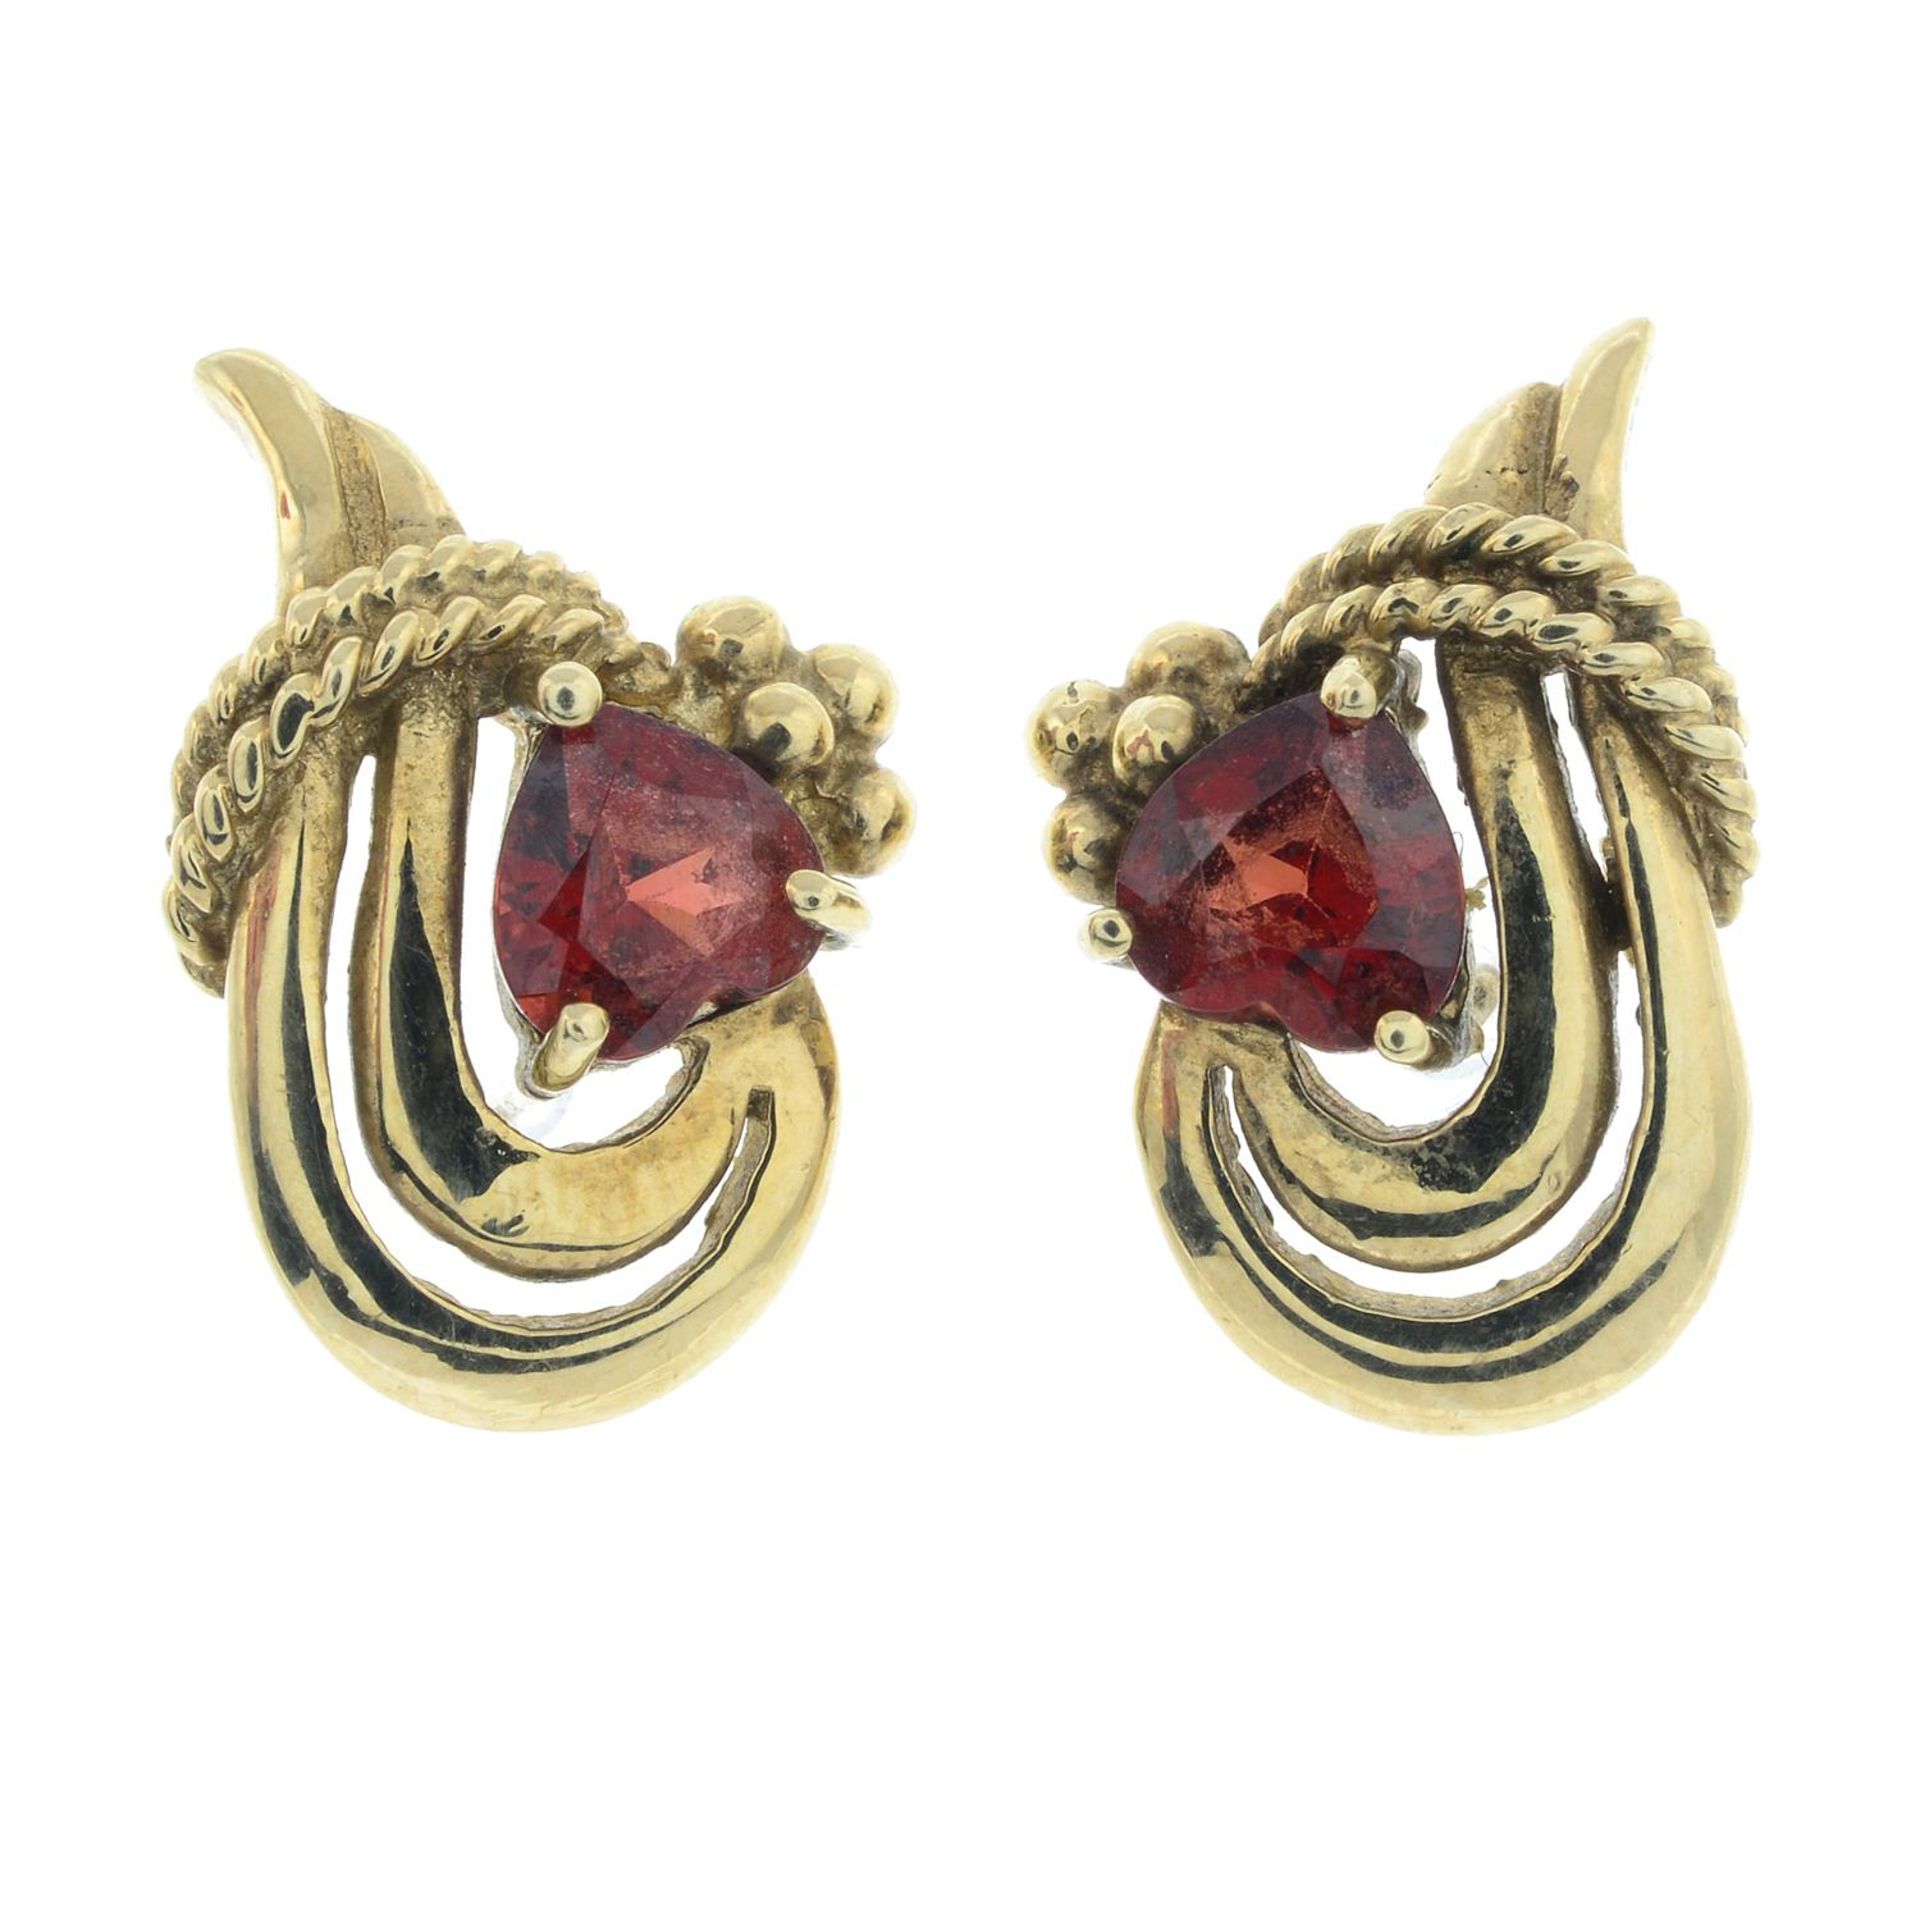 A pair of 9ct gold garnet earrings.